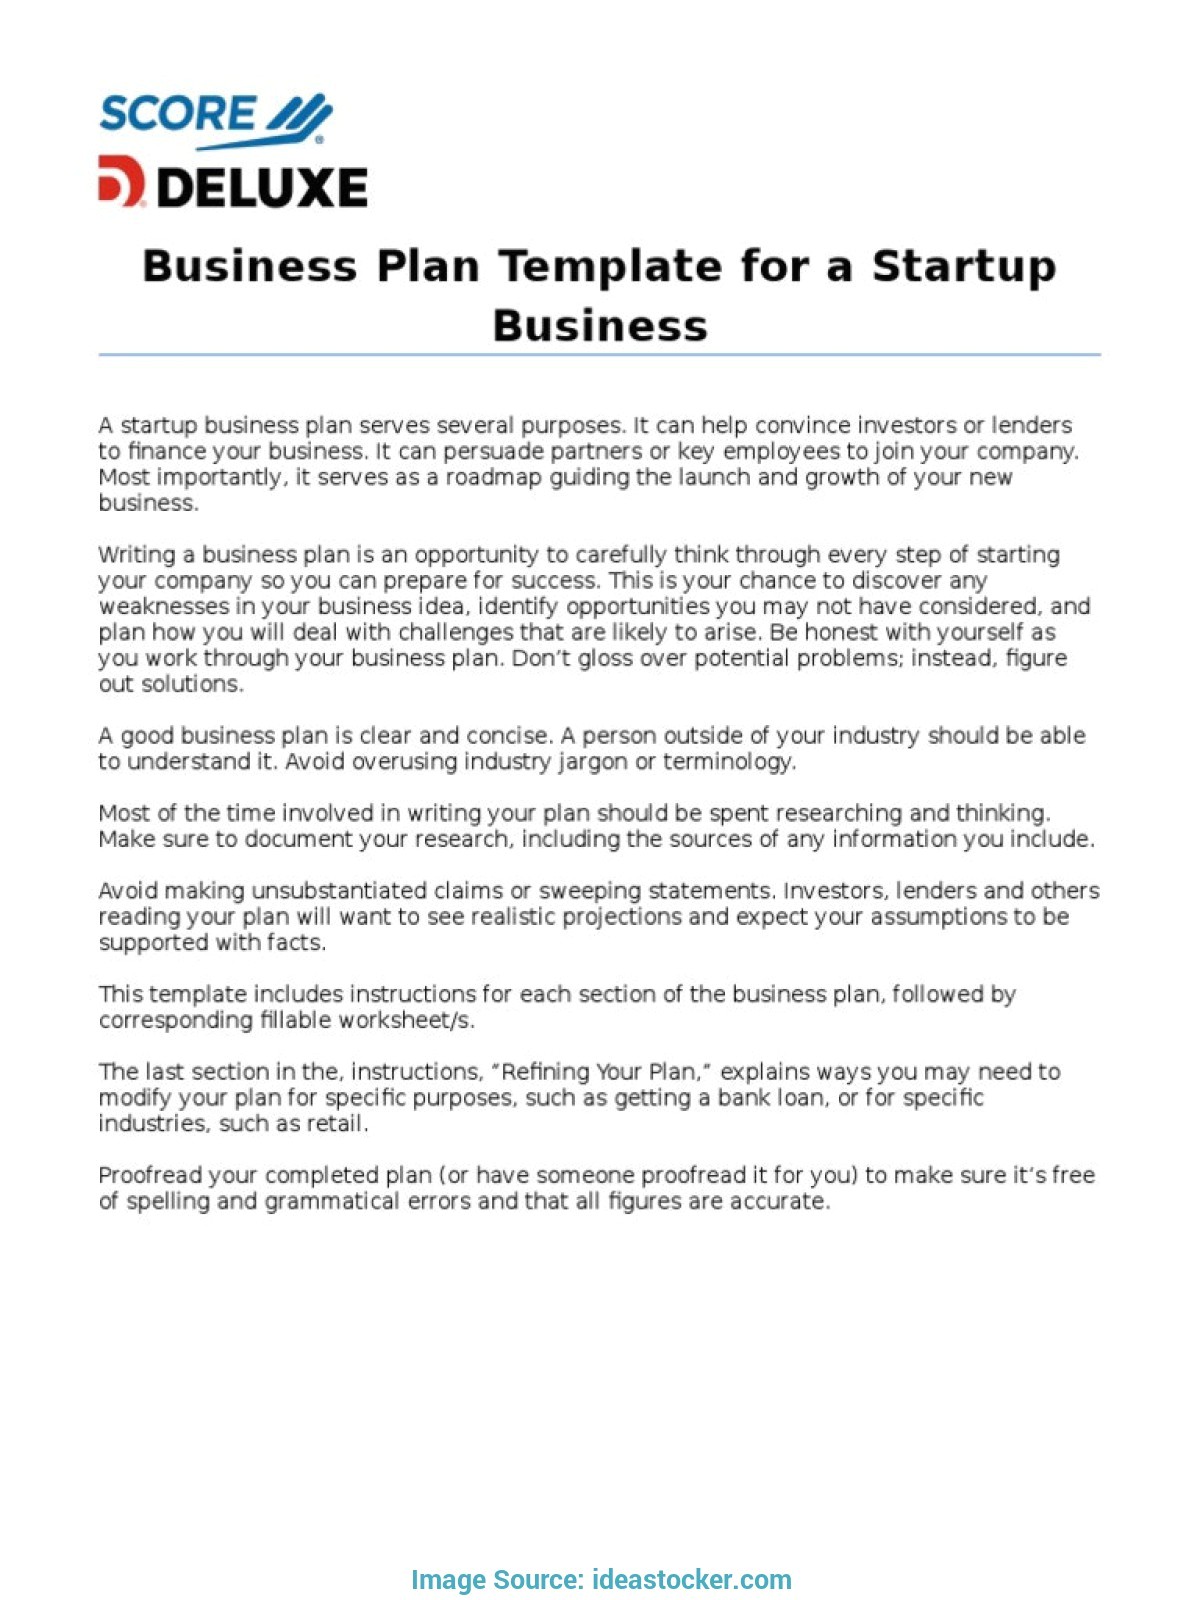 score business plan template